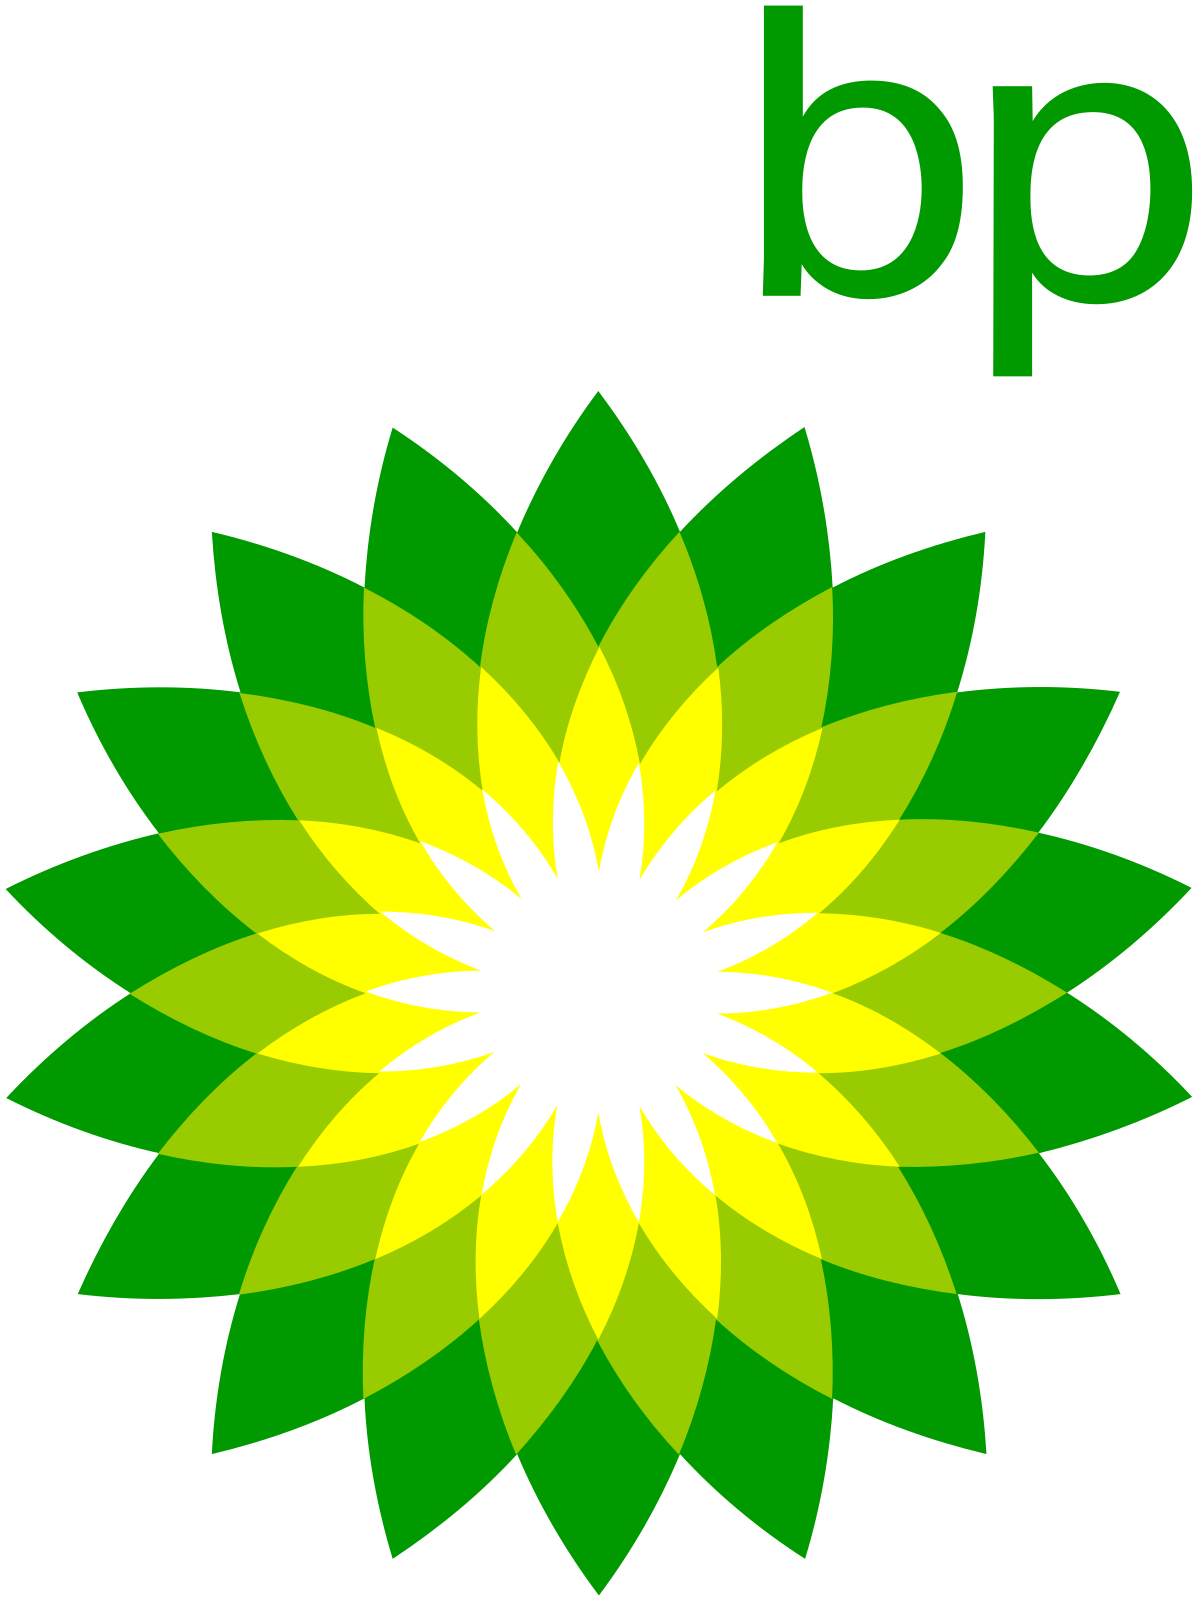 German Oil Company Logo - BP